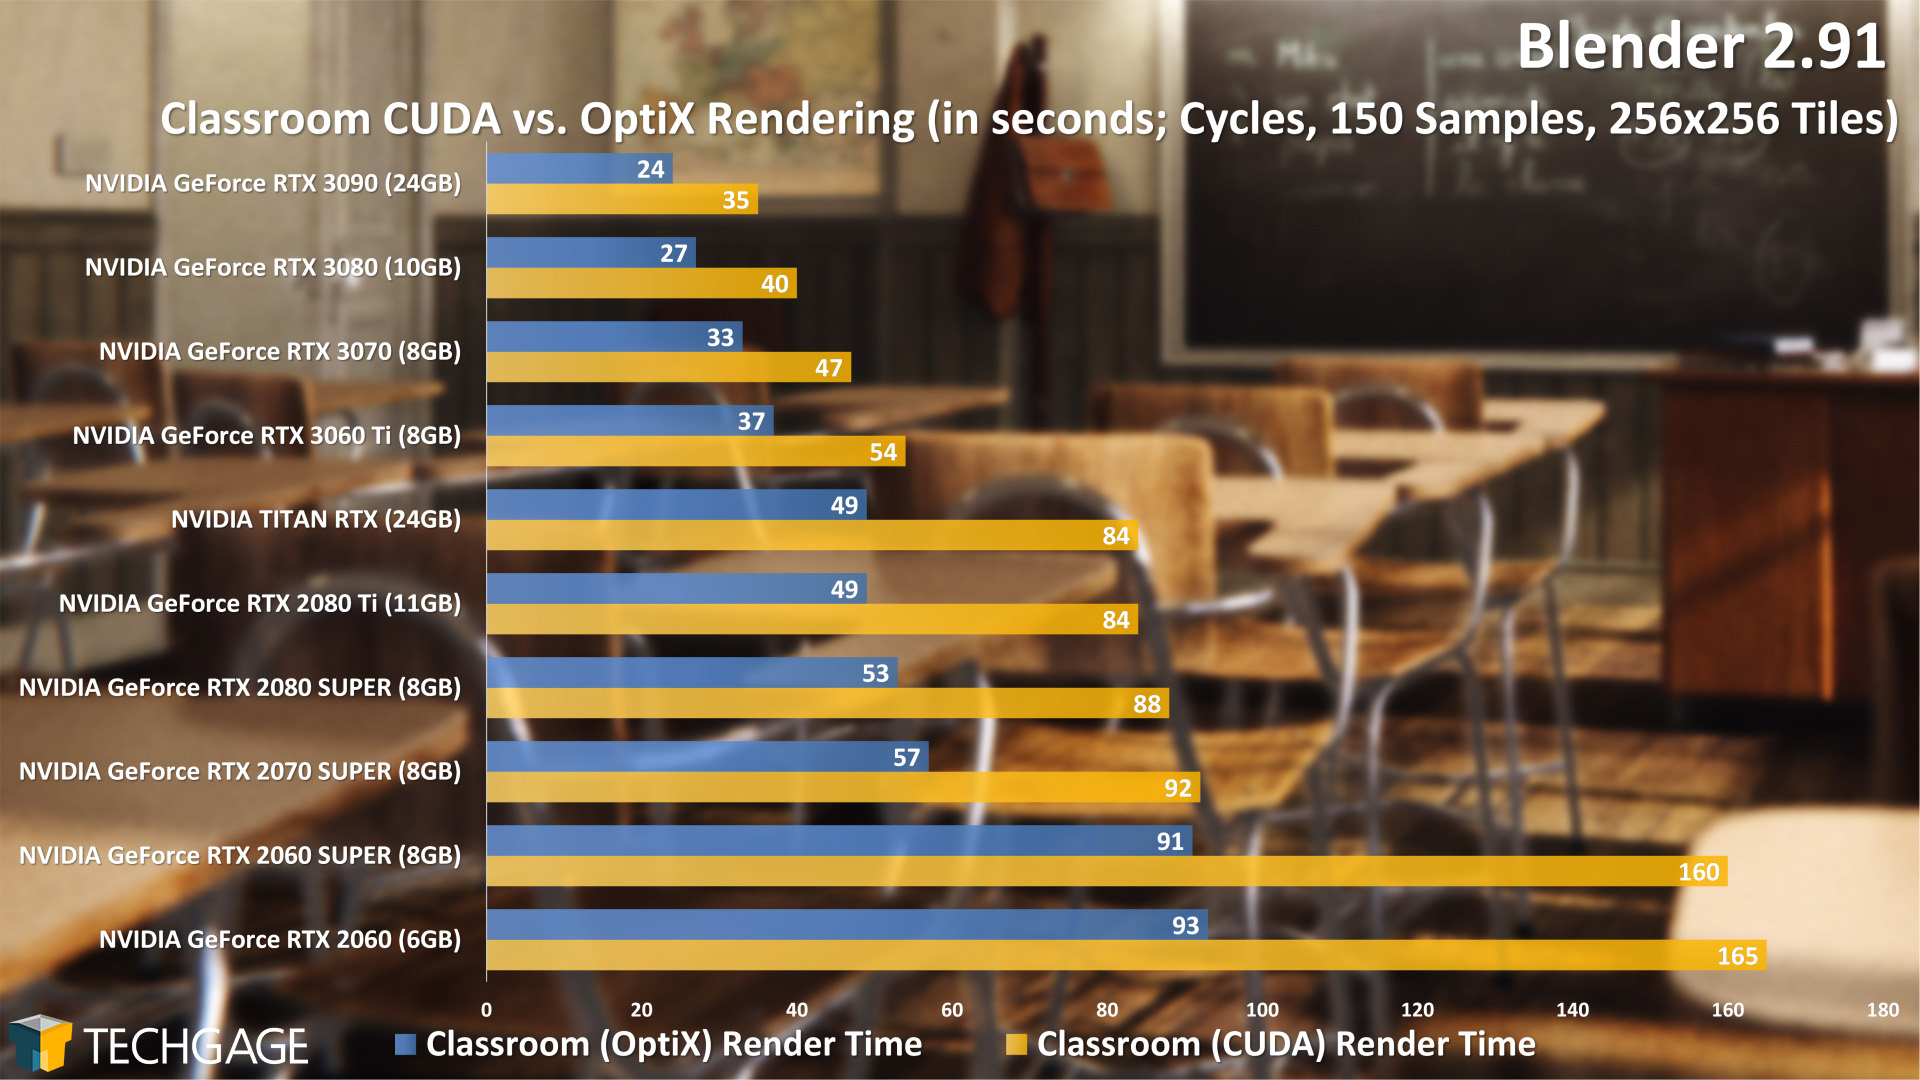 Blender-2.91-Cycles-NVIDIA-OptiX-Render-Performance-Classroom-Render-December-2020.jpg